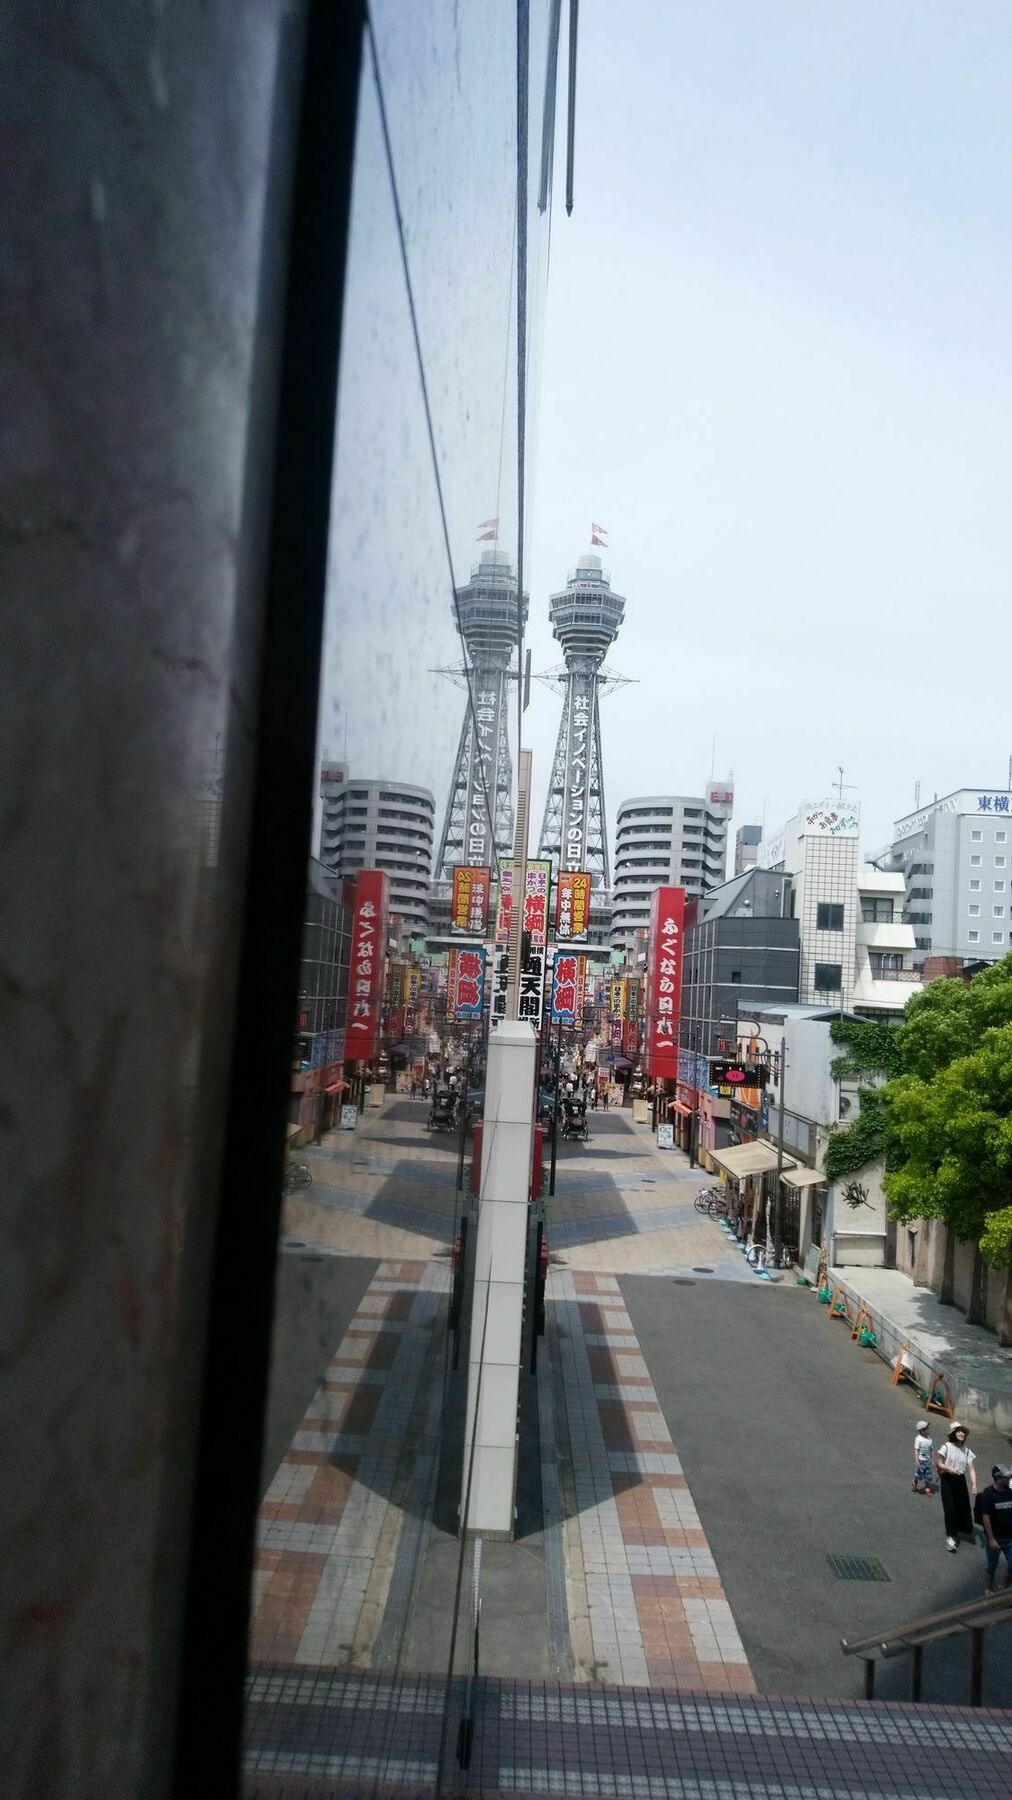 Hotel Vertex Osaka Exterior photo